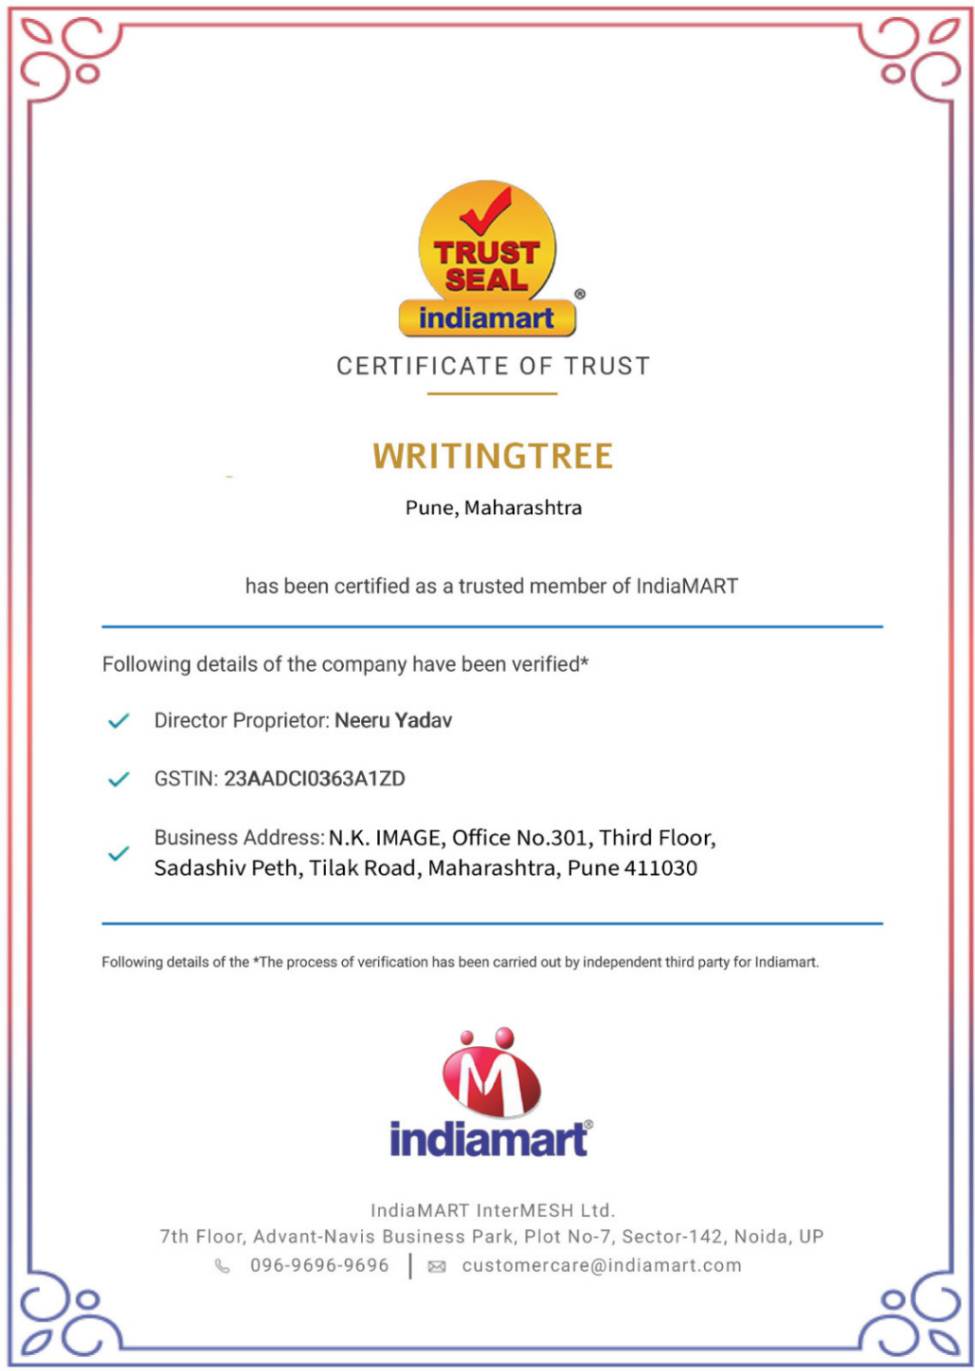 indiamart trustseal- writingtree